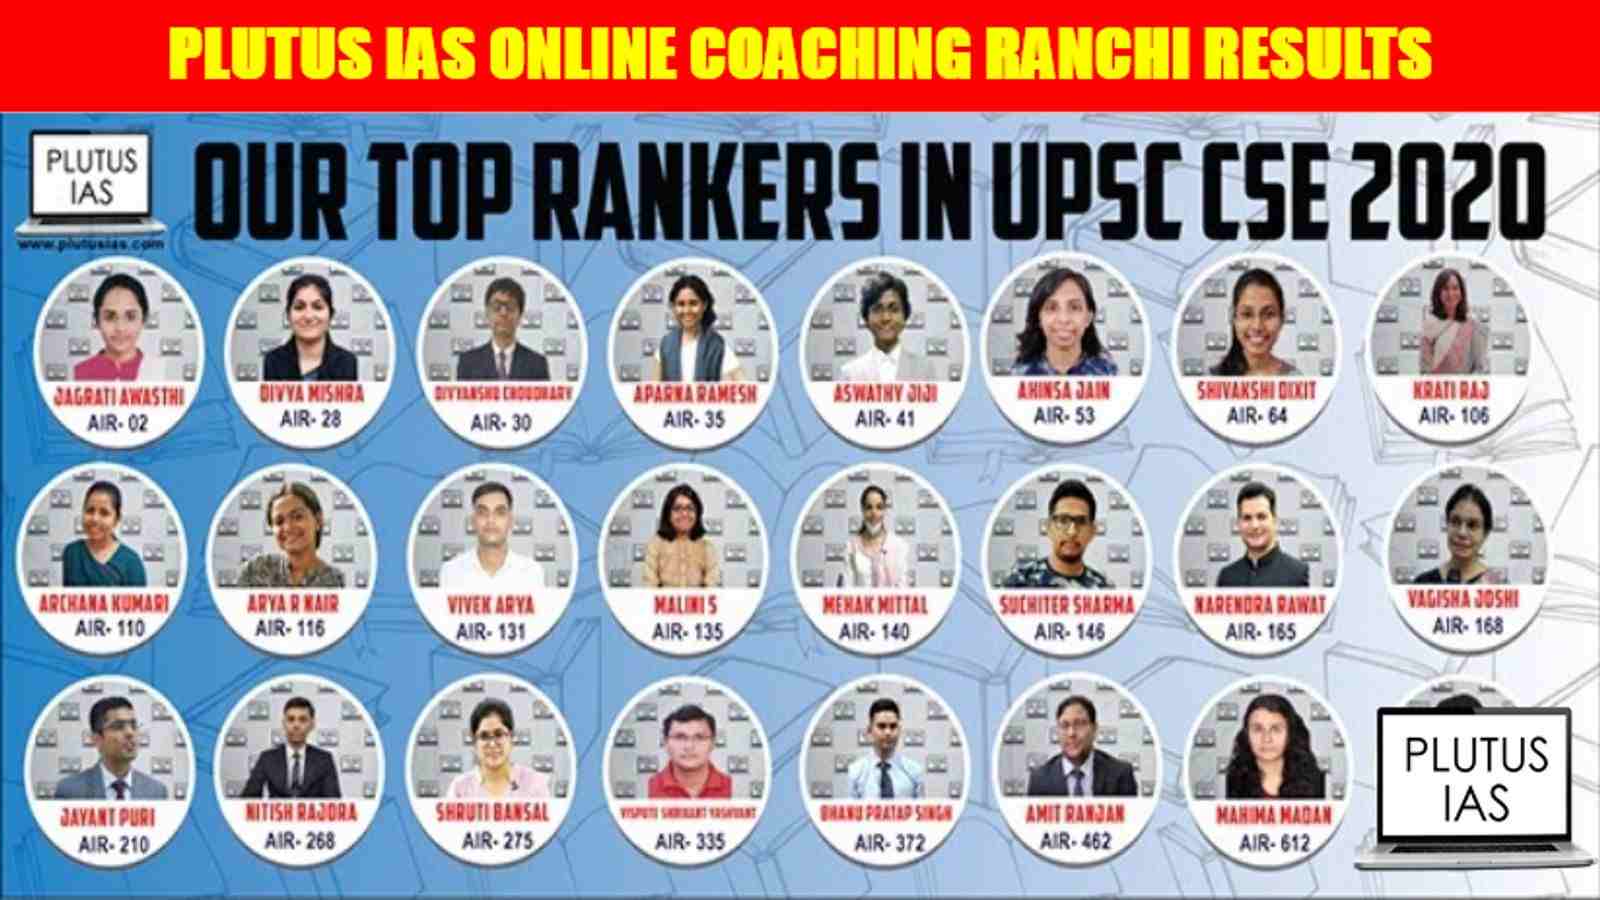 Plutus IAS Online Coaching Ranchi Results